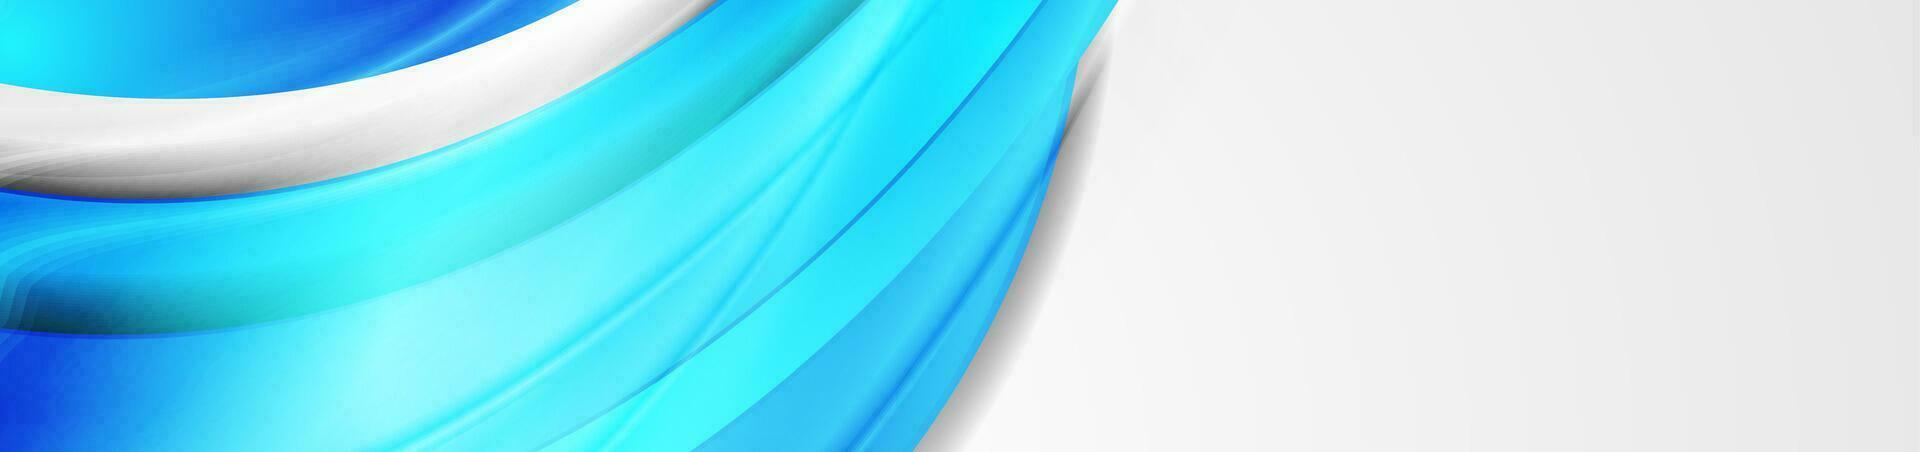 ljus blå skinande glansig vågor abstrakt bakgrund vektor